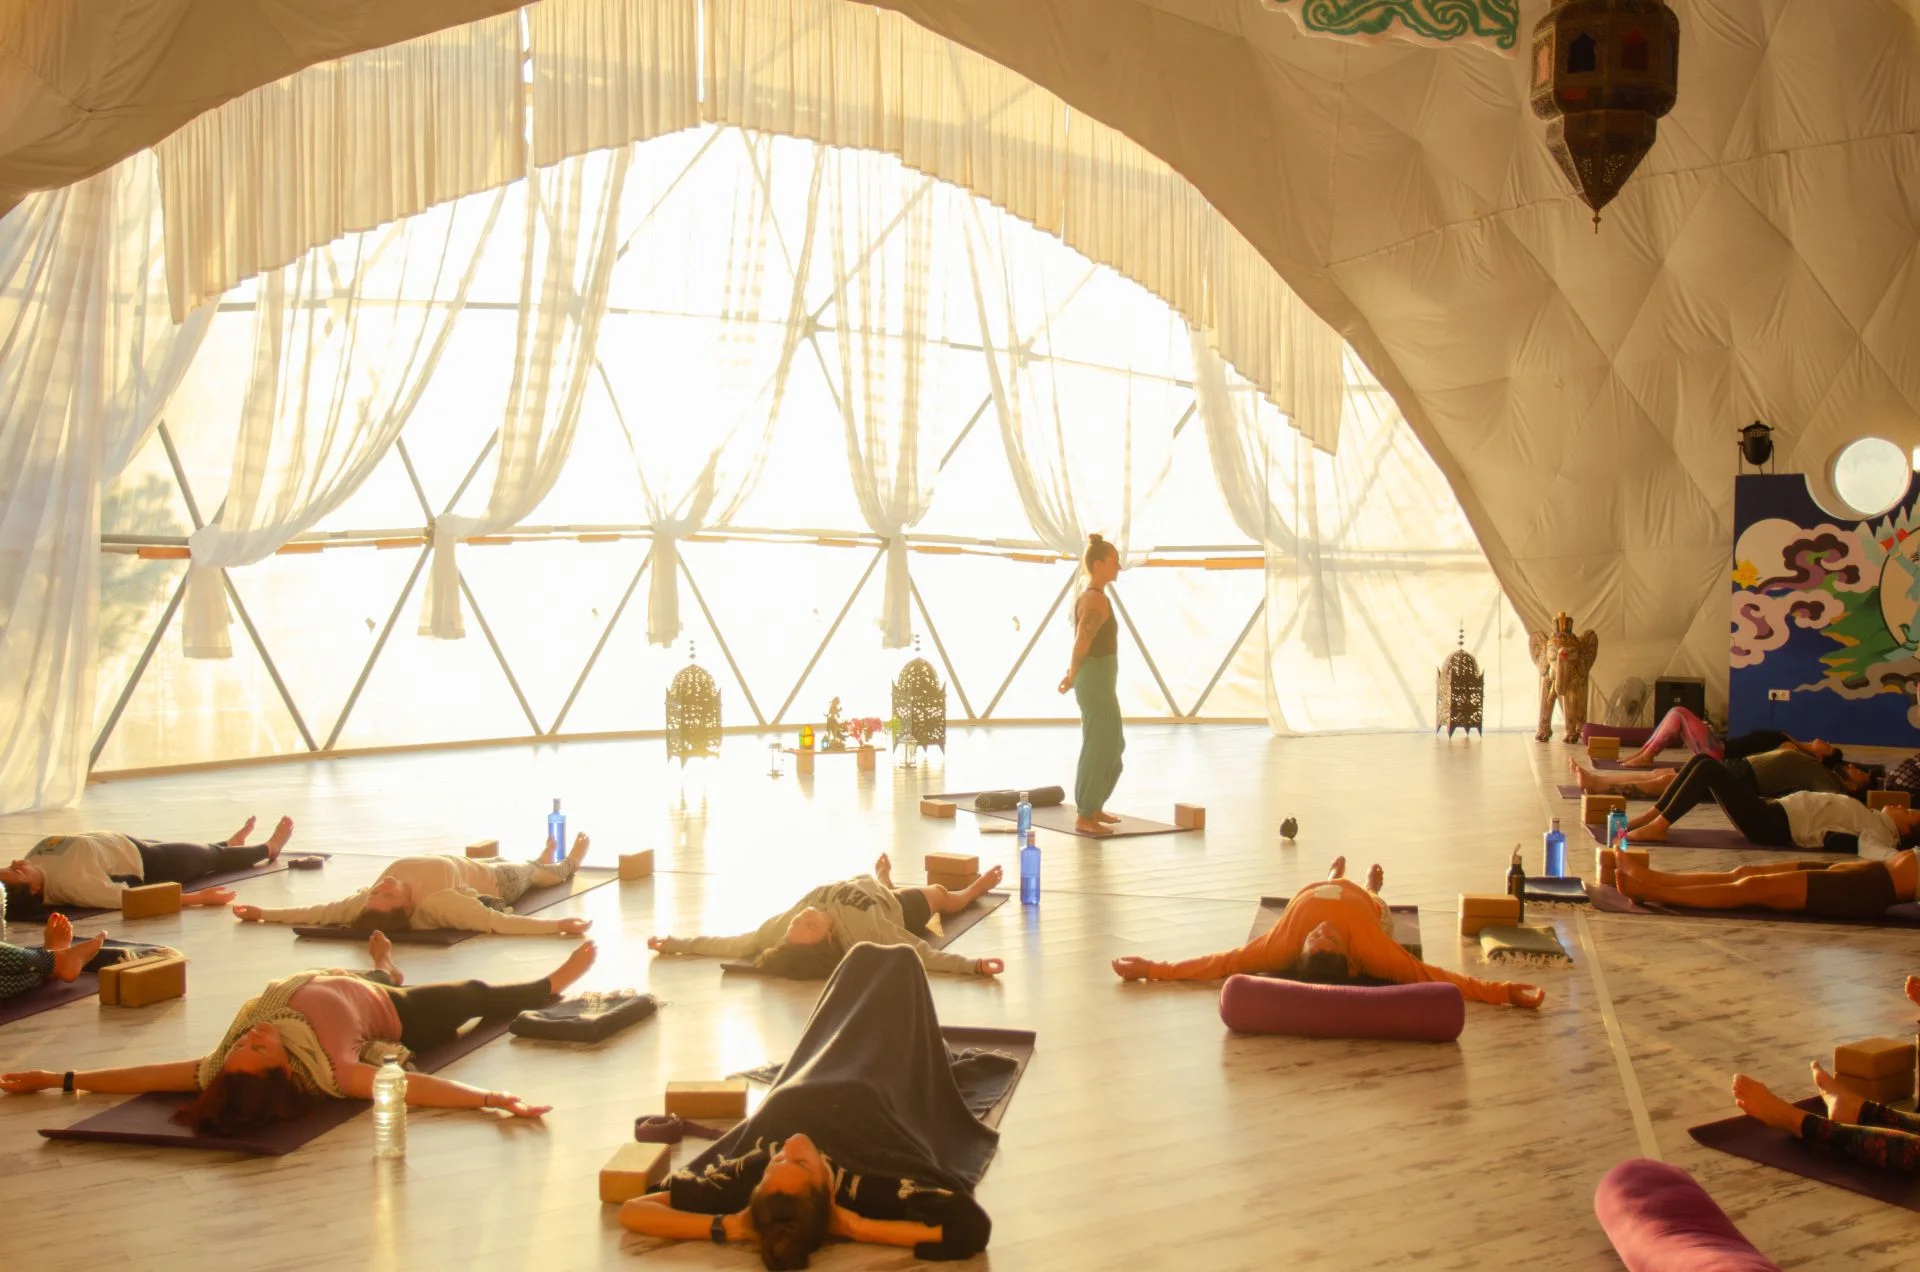 22 day 200 hours intensive vinyasa yoga teacher training in andalusia, spain181707909704.webp